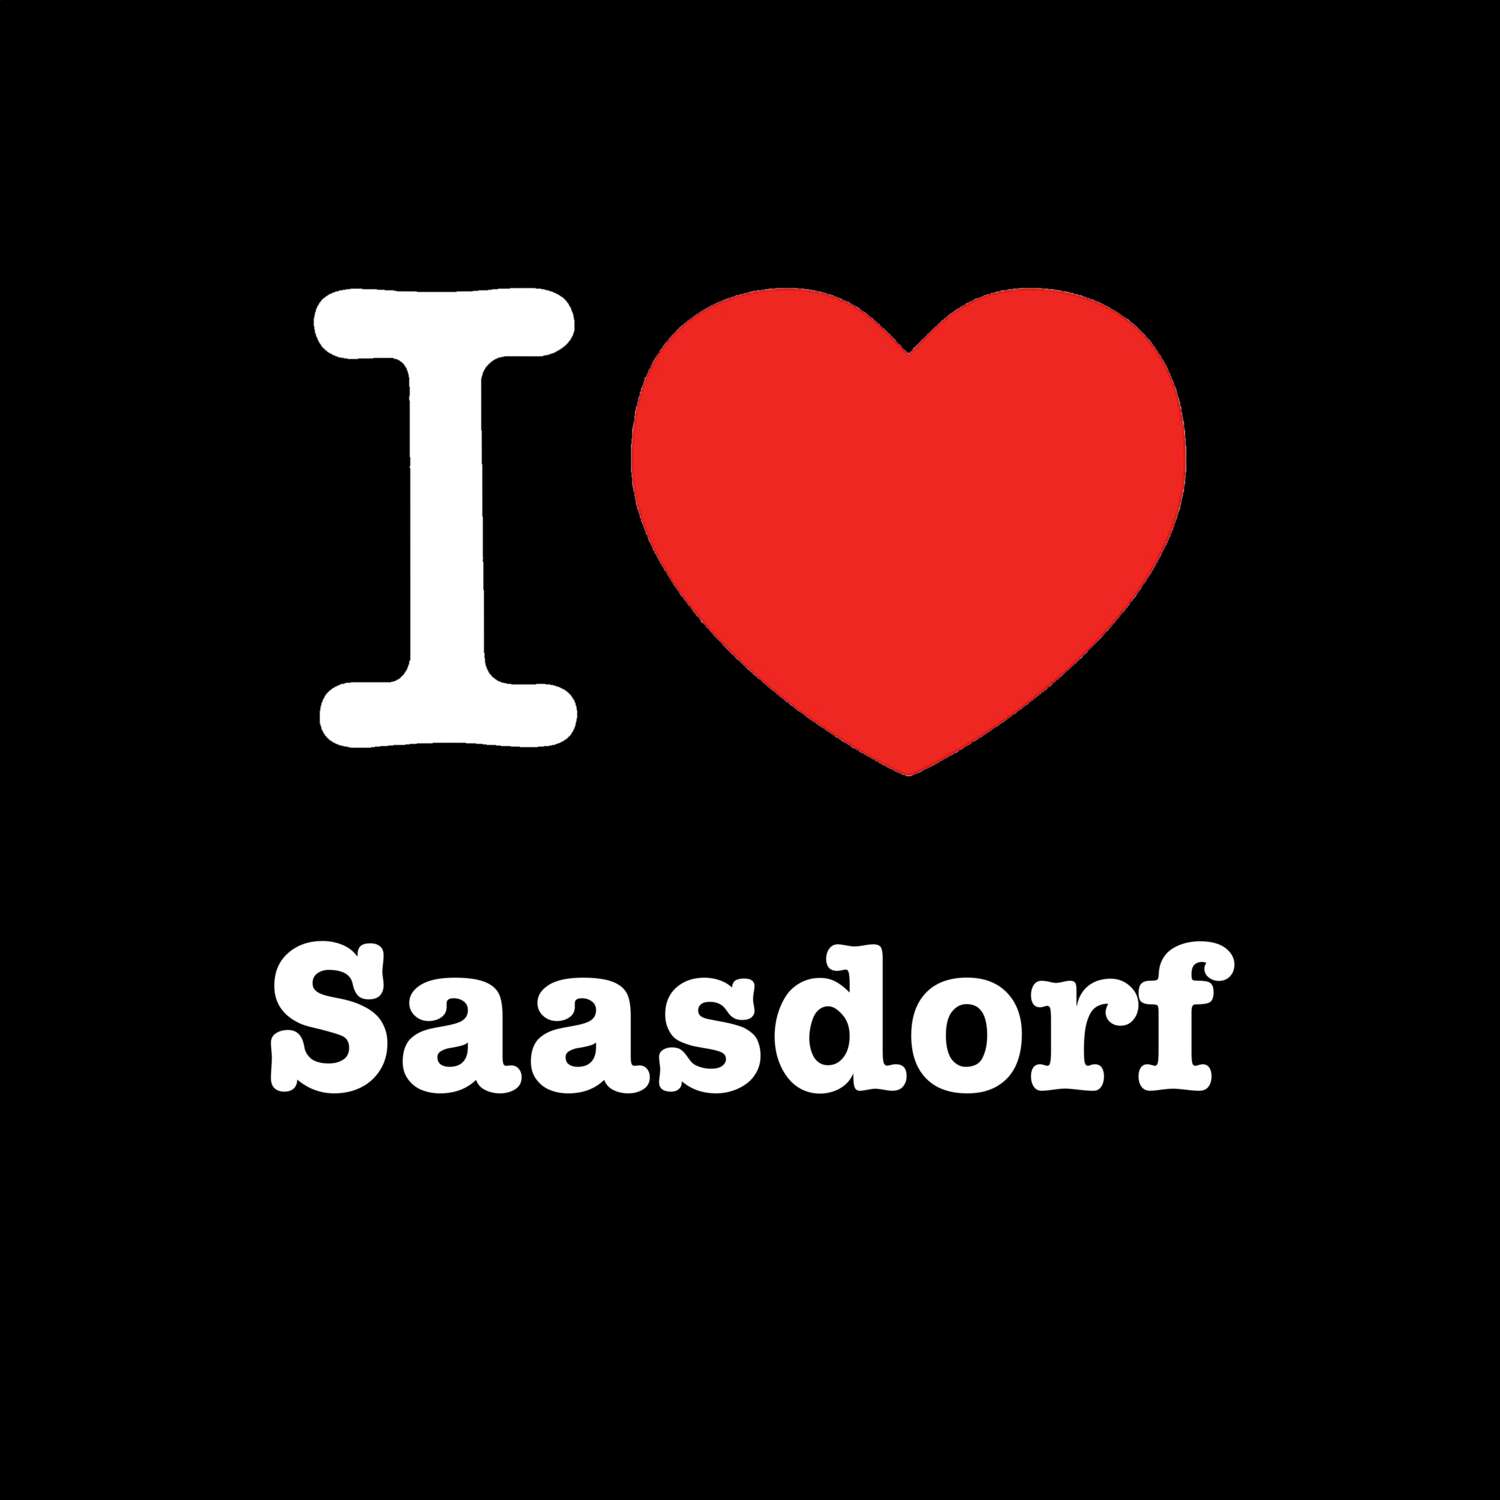 Saasdorf T-Shirt »I love«